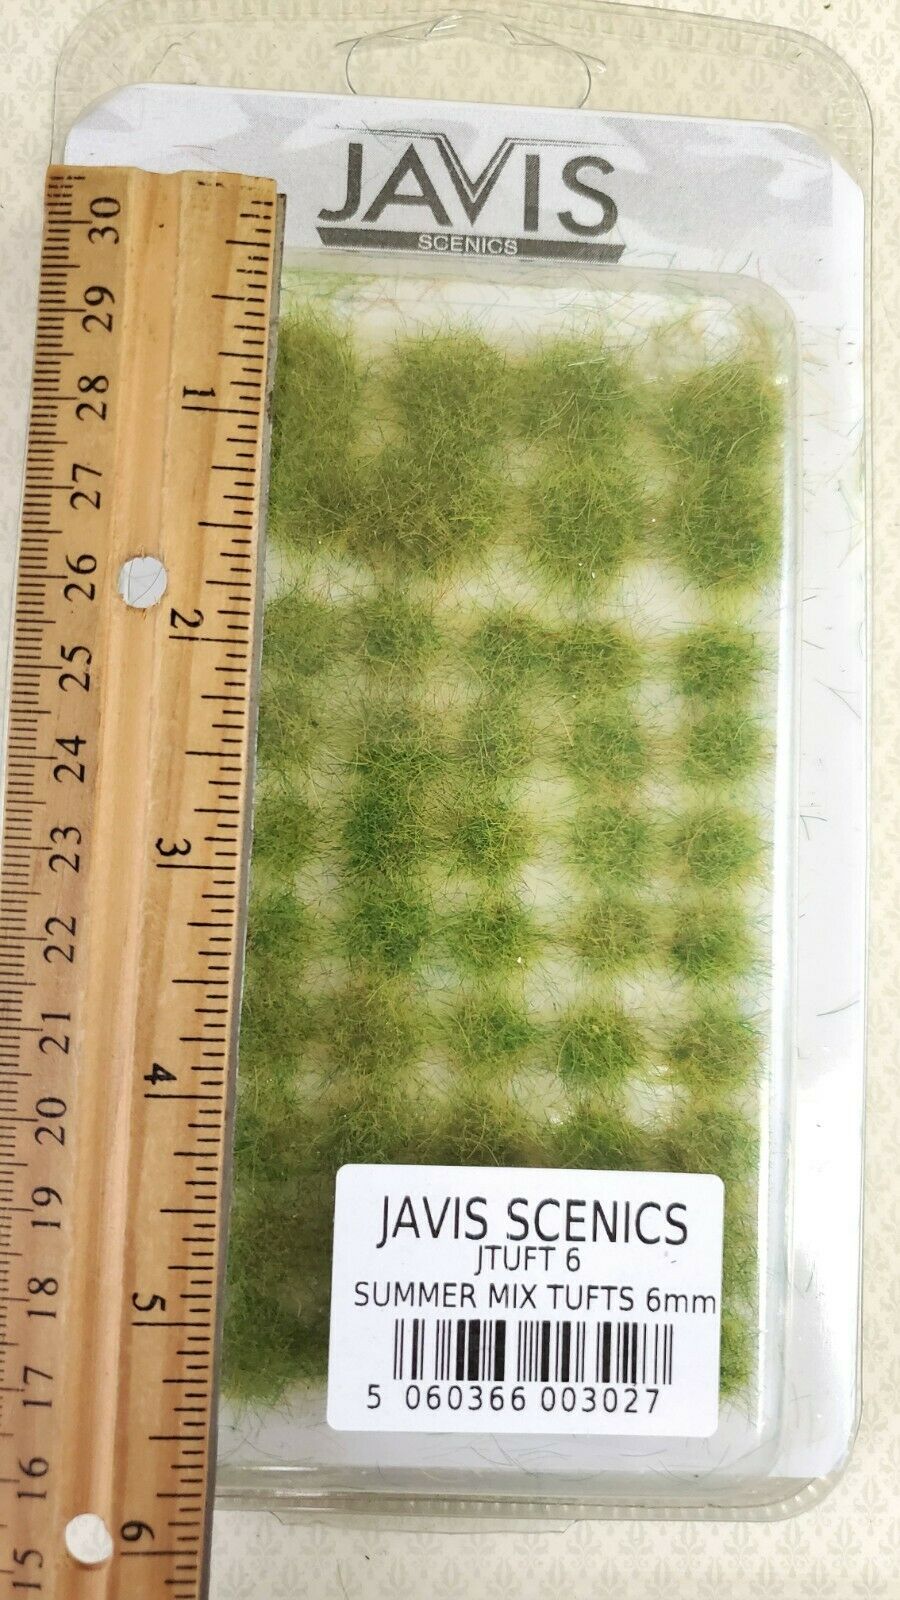 Javis Tufts Summer Mix Shrubs Plants Model RR Dioramas Dollhouses Grass Scenery - Miniature Crush